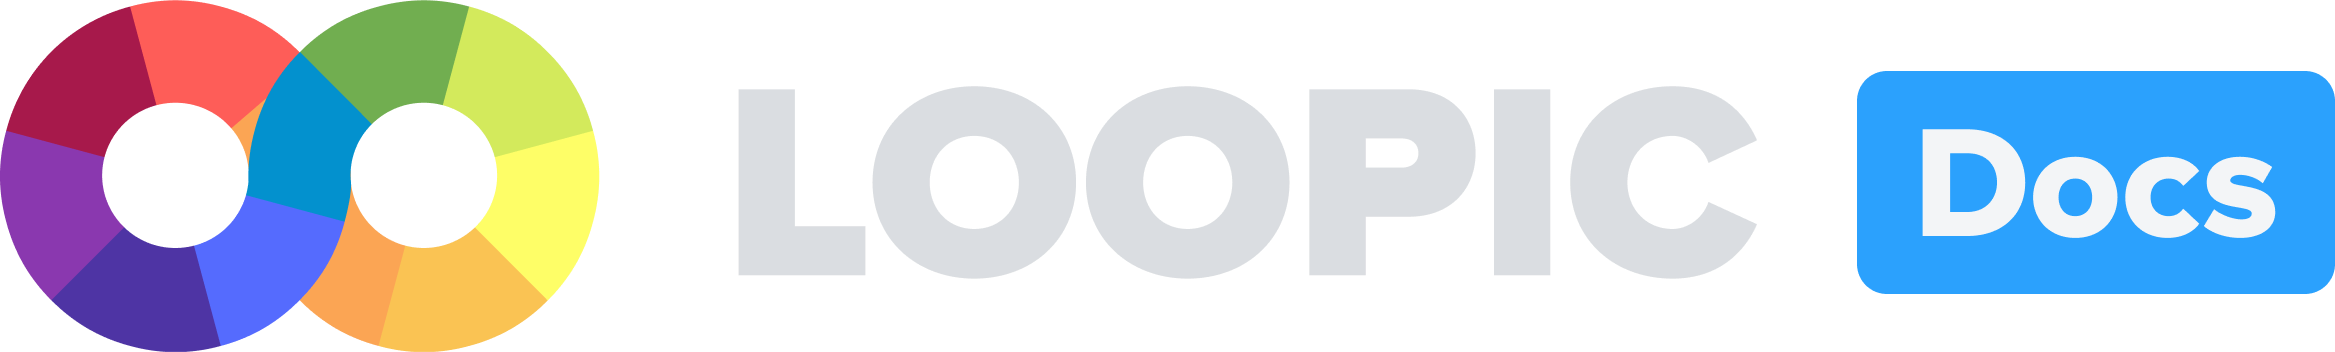 Loopic Docs Logo